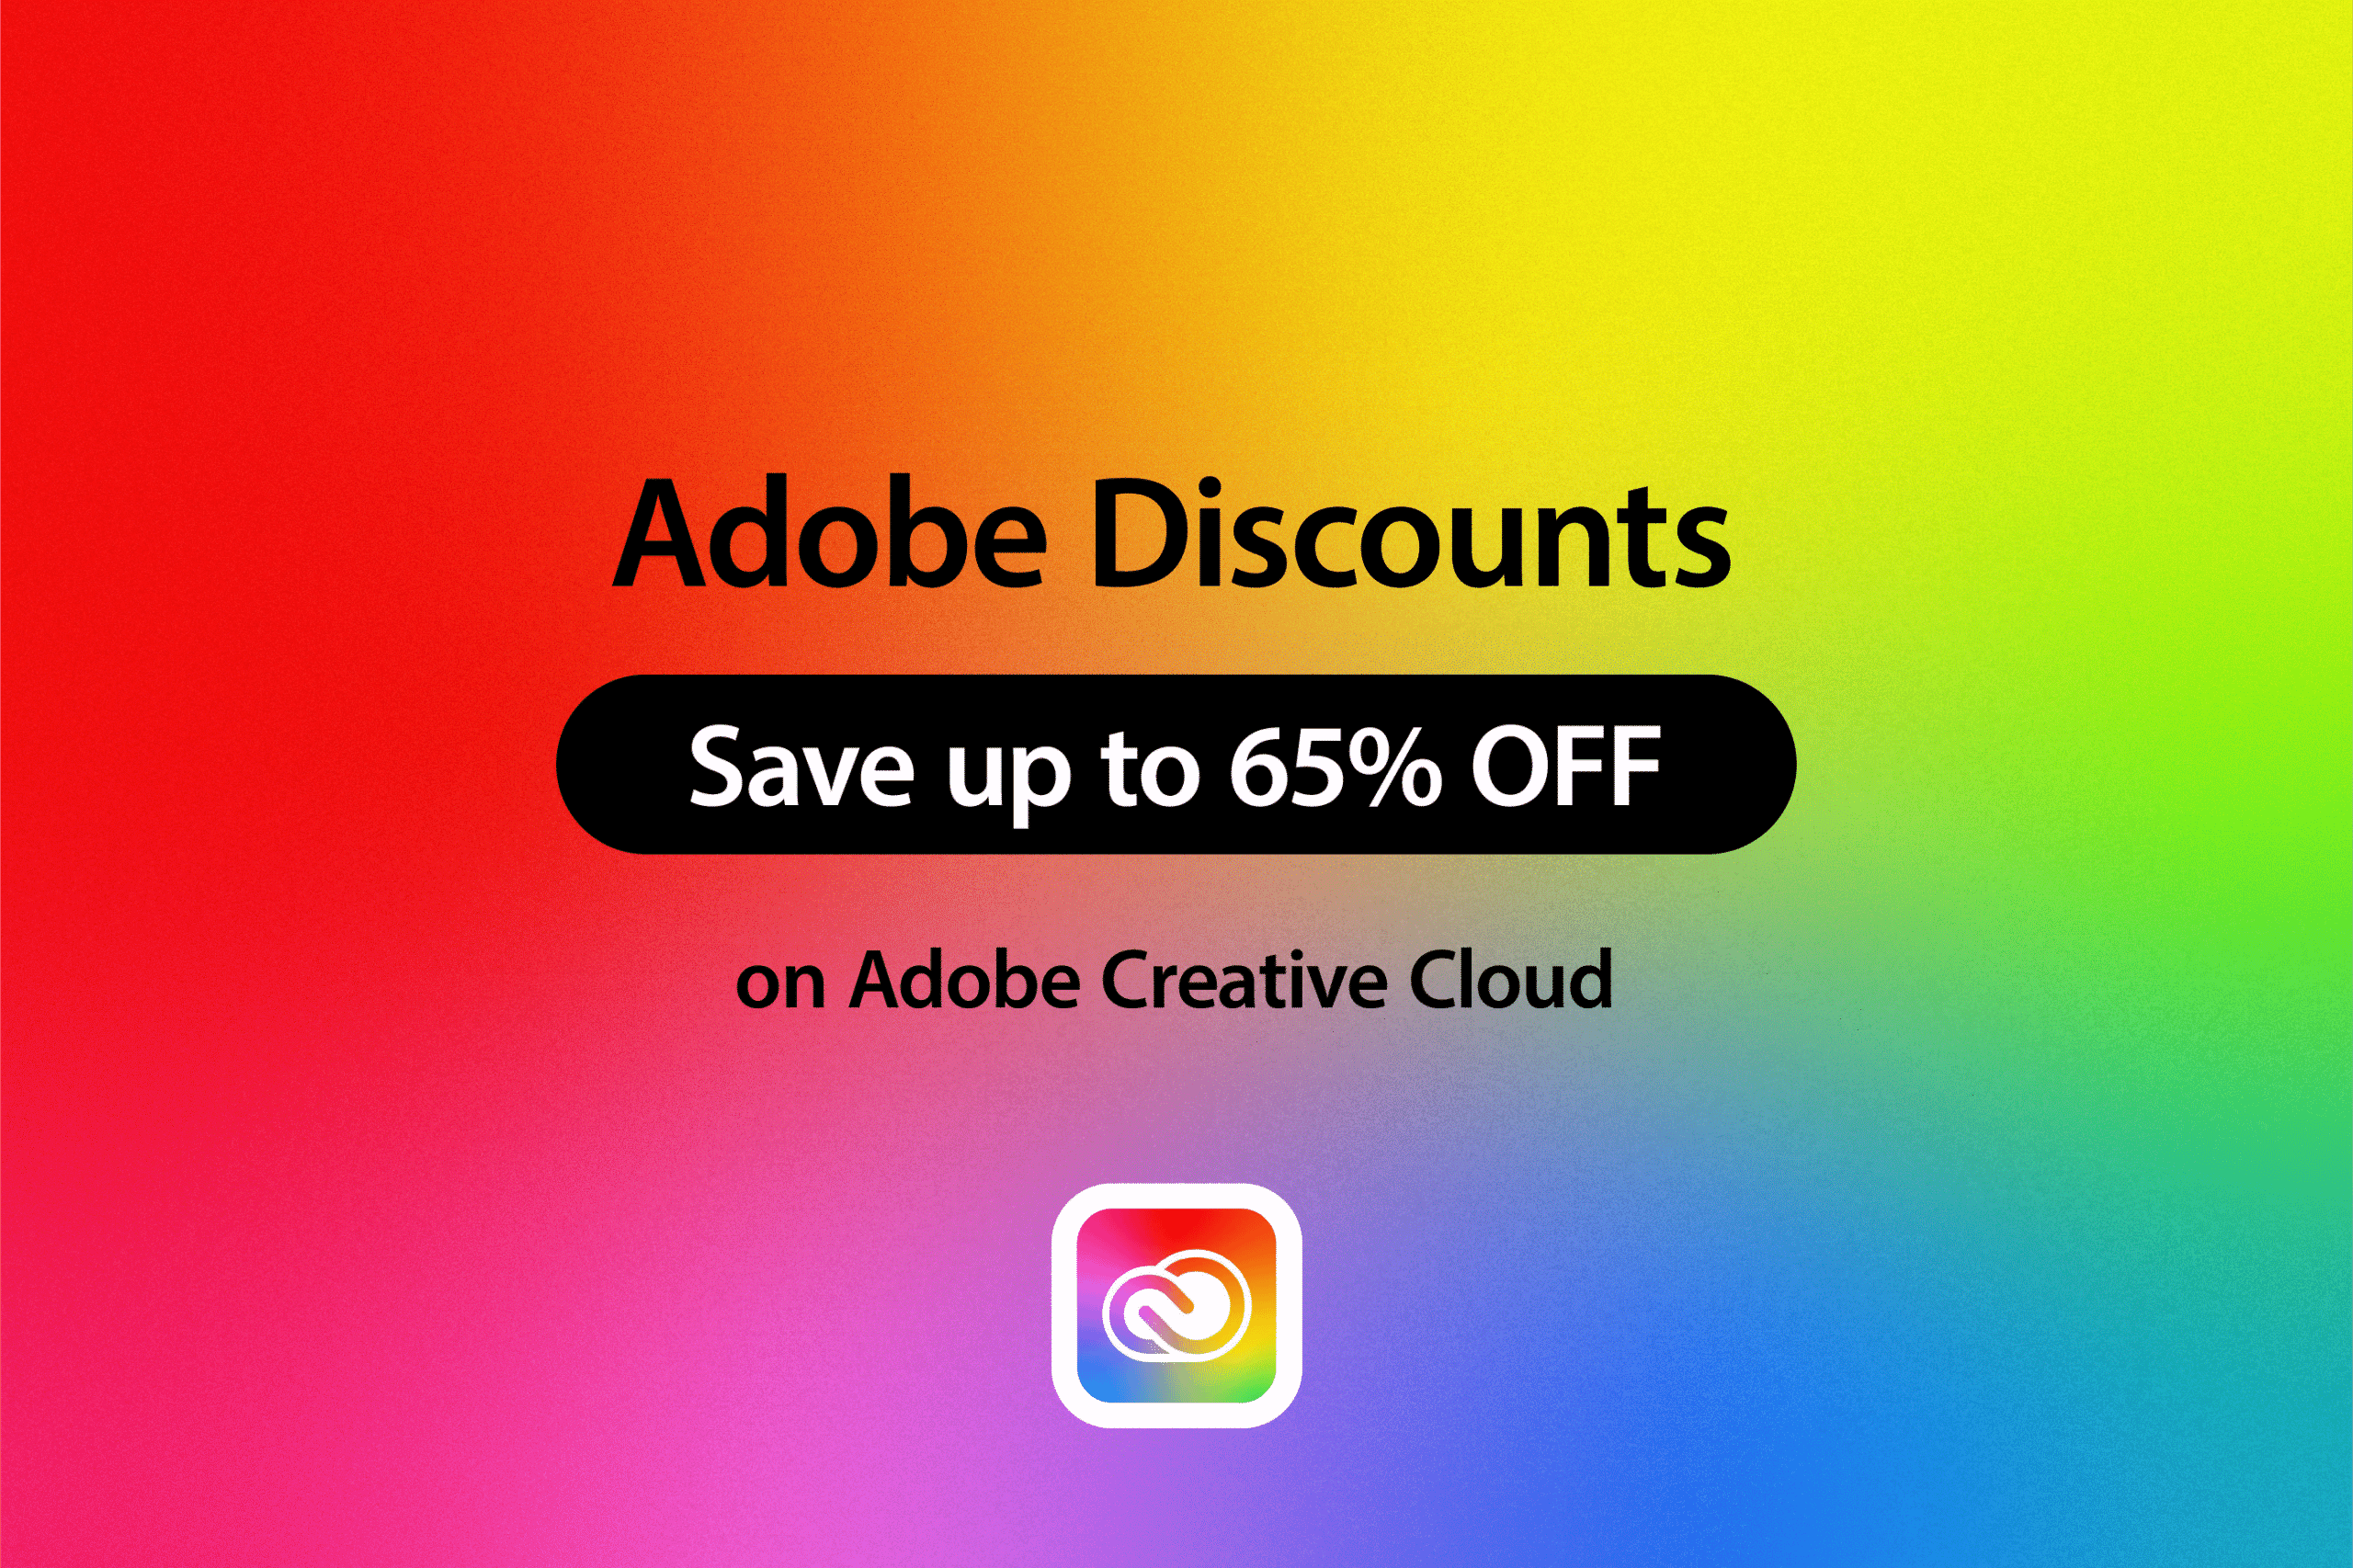 Adobe Creative Cloud Discount - Save 65%